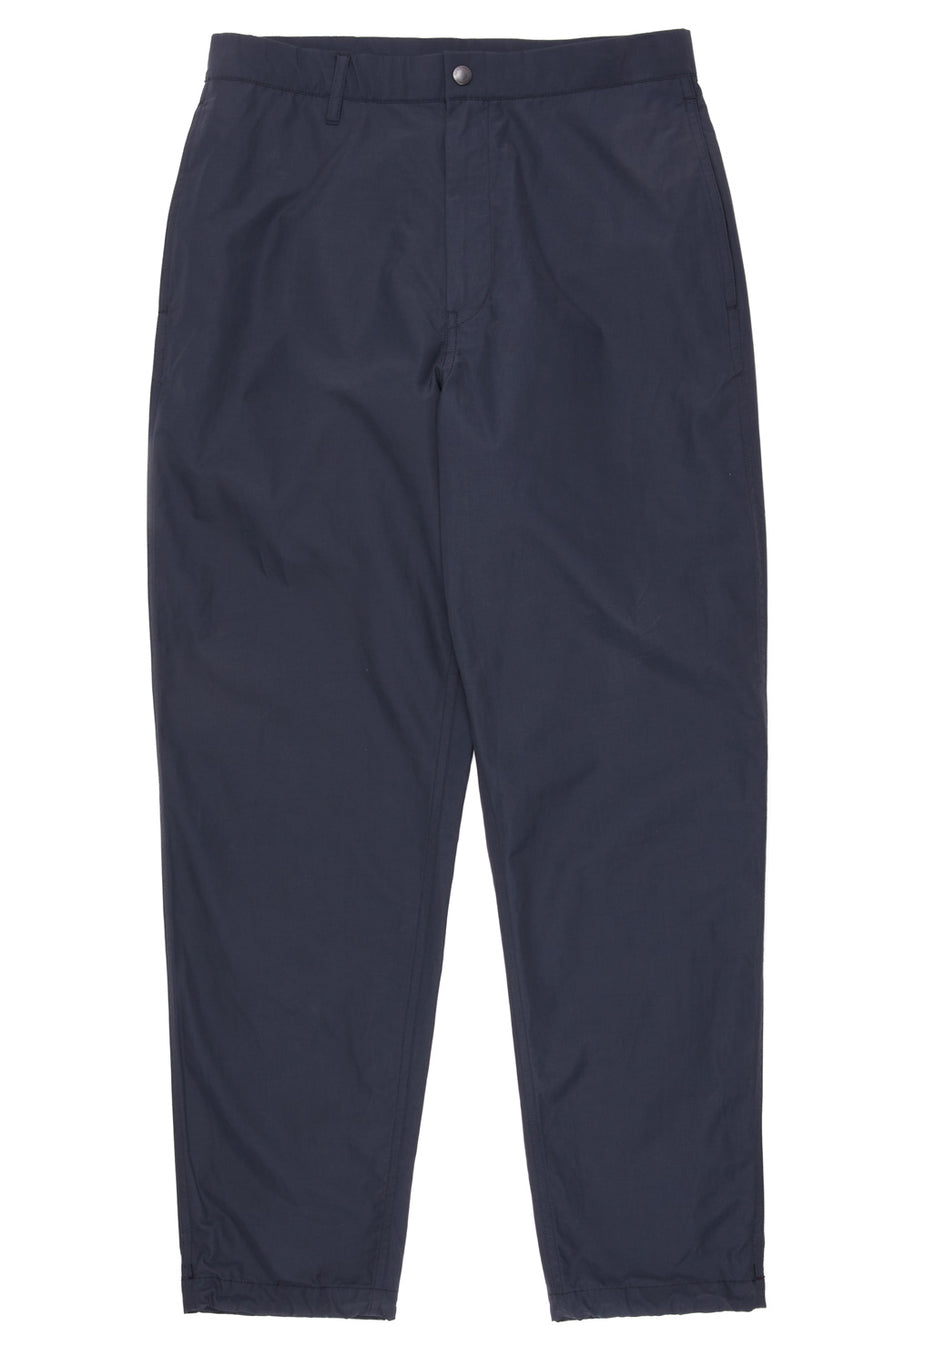 Snow Peak Men's Light Mountain Cloth Pants - Navy